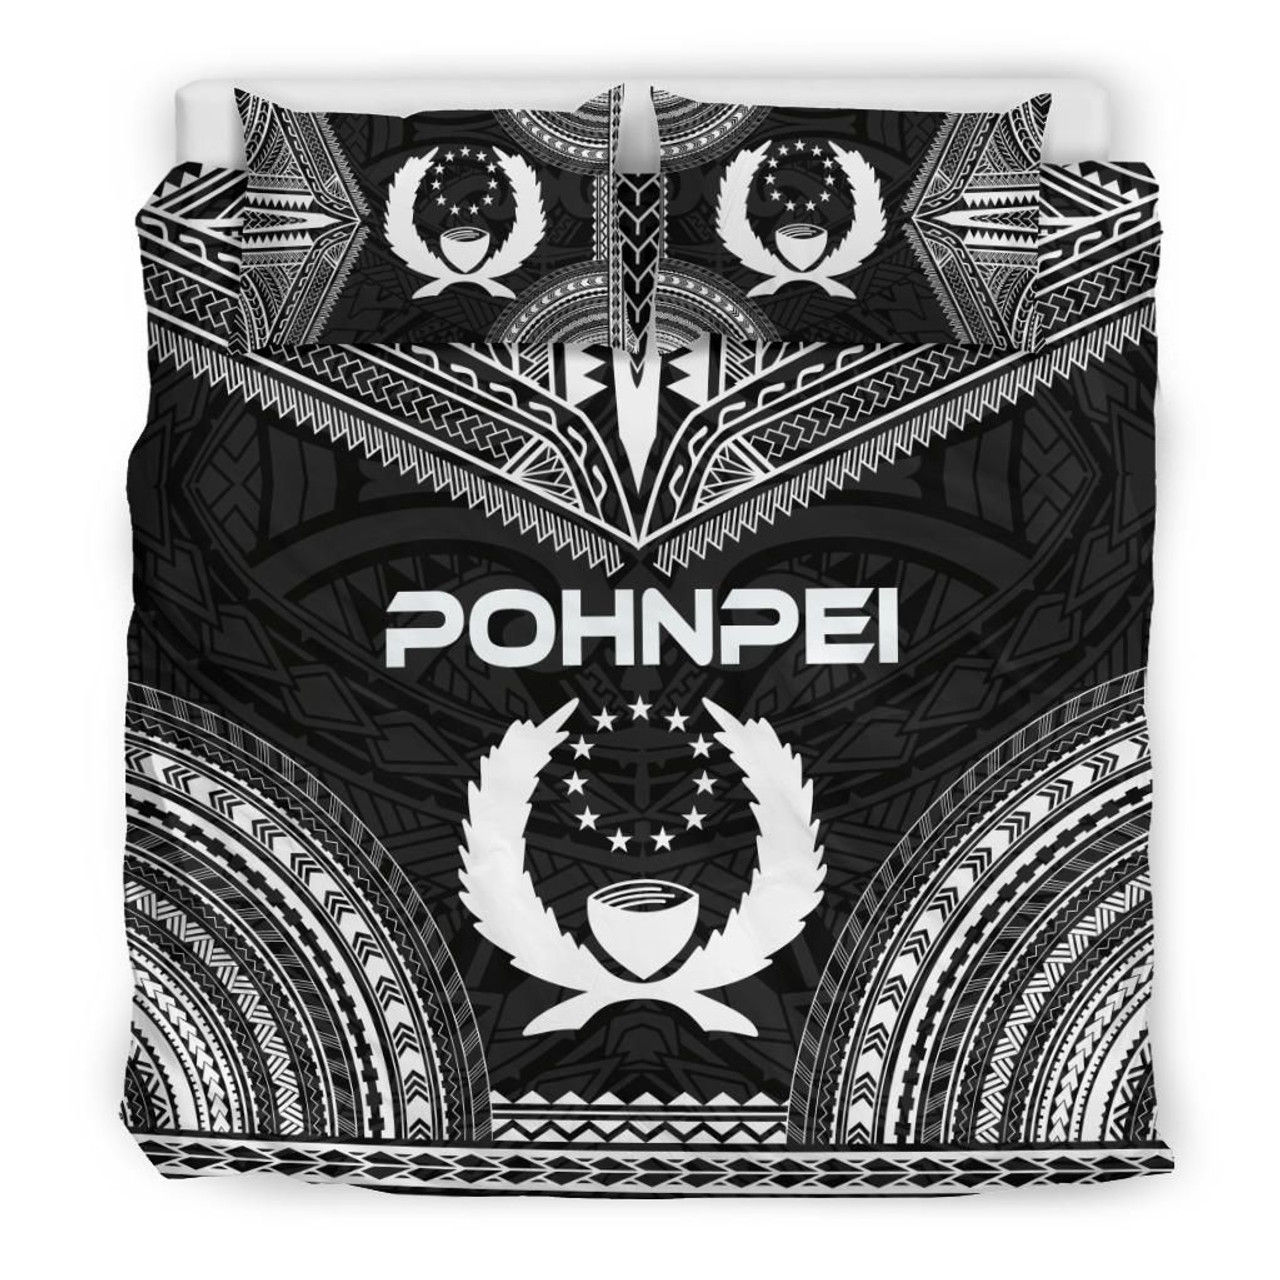 Pohnpei Polynesian Chief Duvet Cover Set - Black Version 3